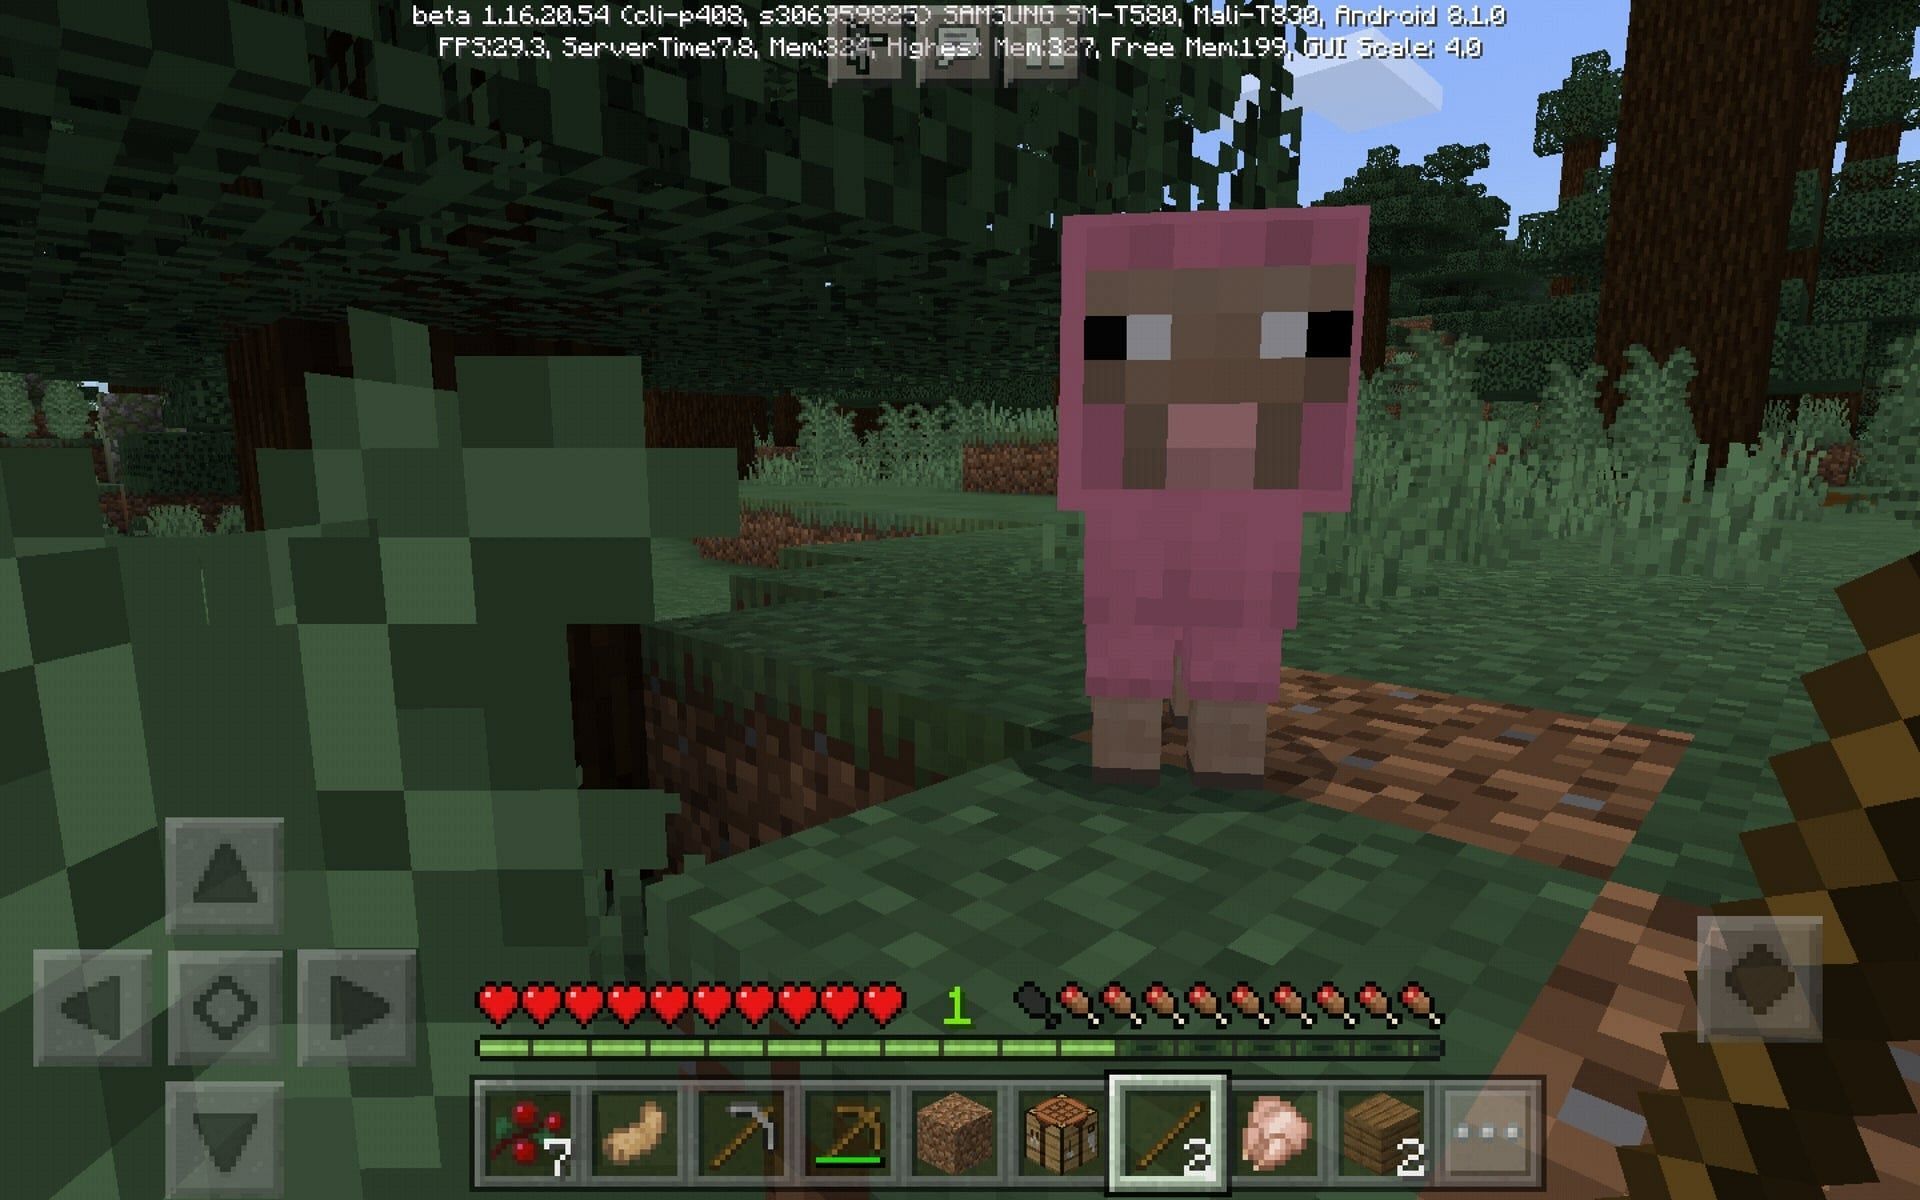 sheep can be tamed in Minecraft (image via Mojang)